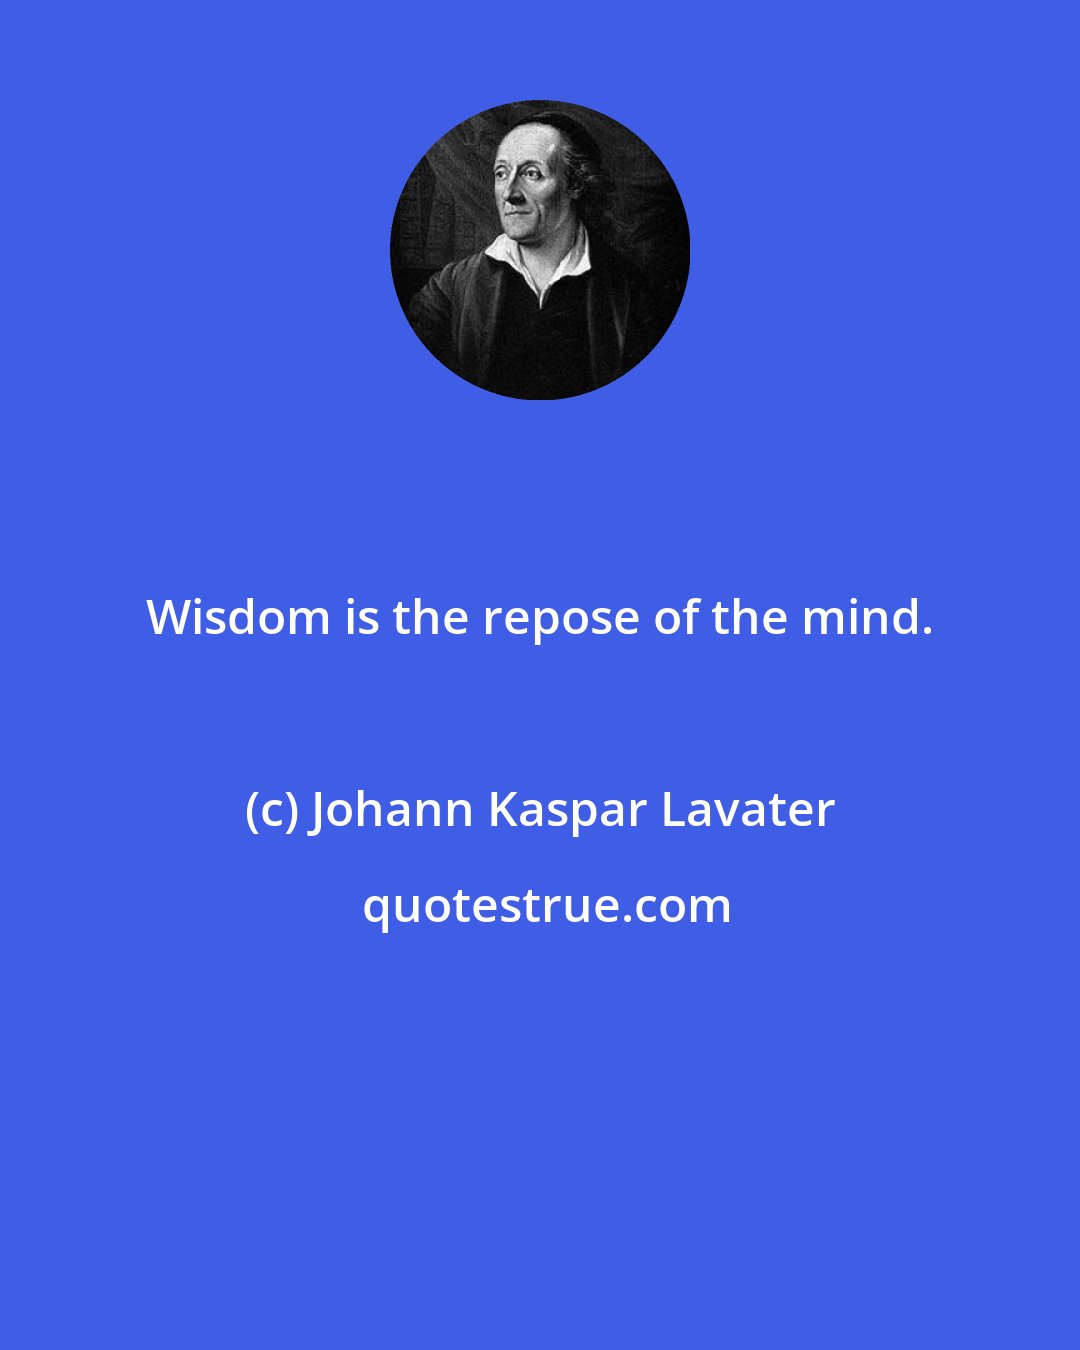 Johann Kaspar Lavater: Wisdom is the repose of the mind.